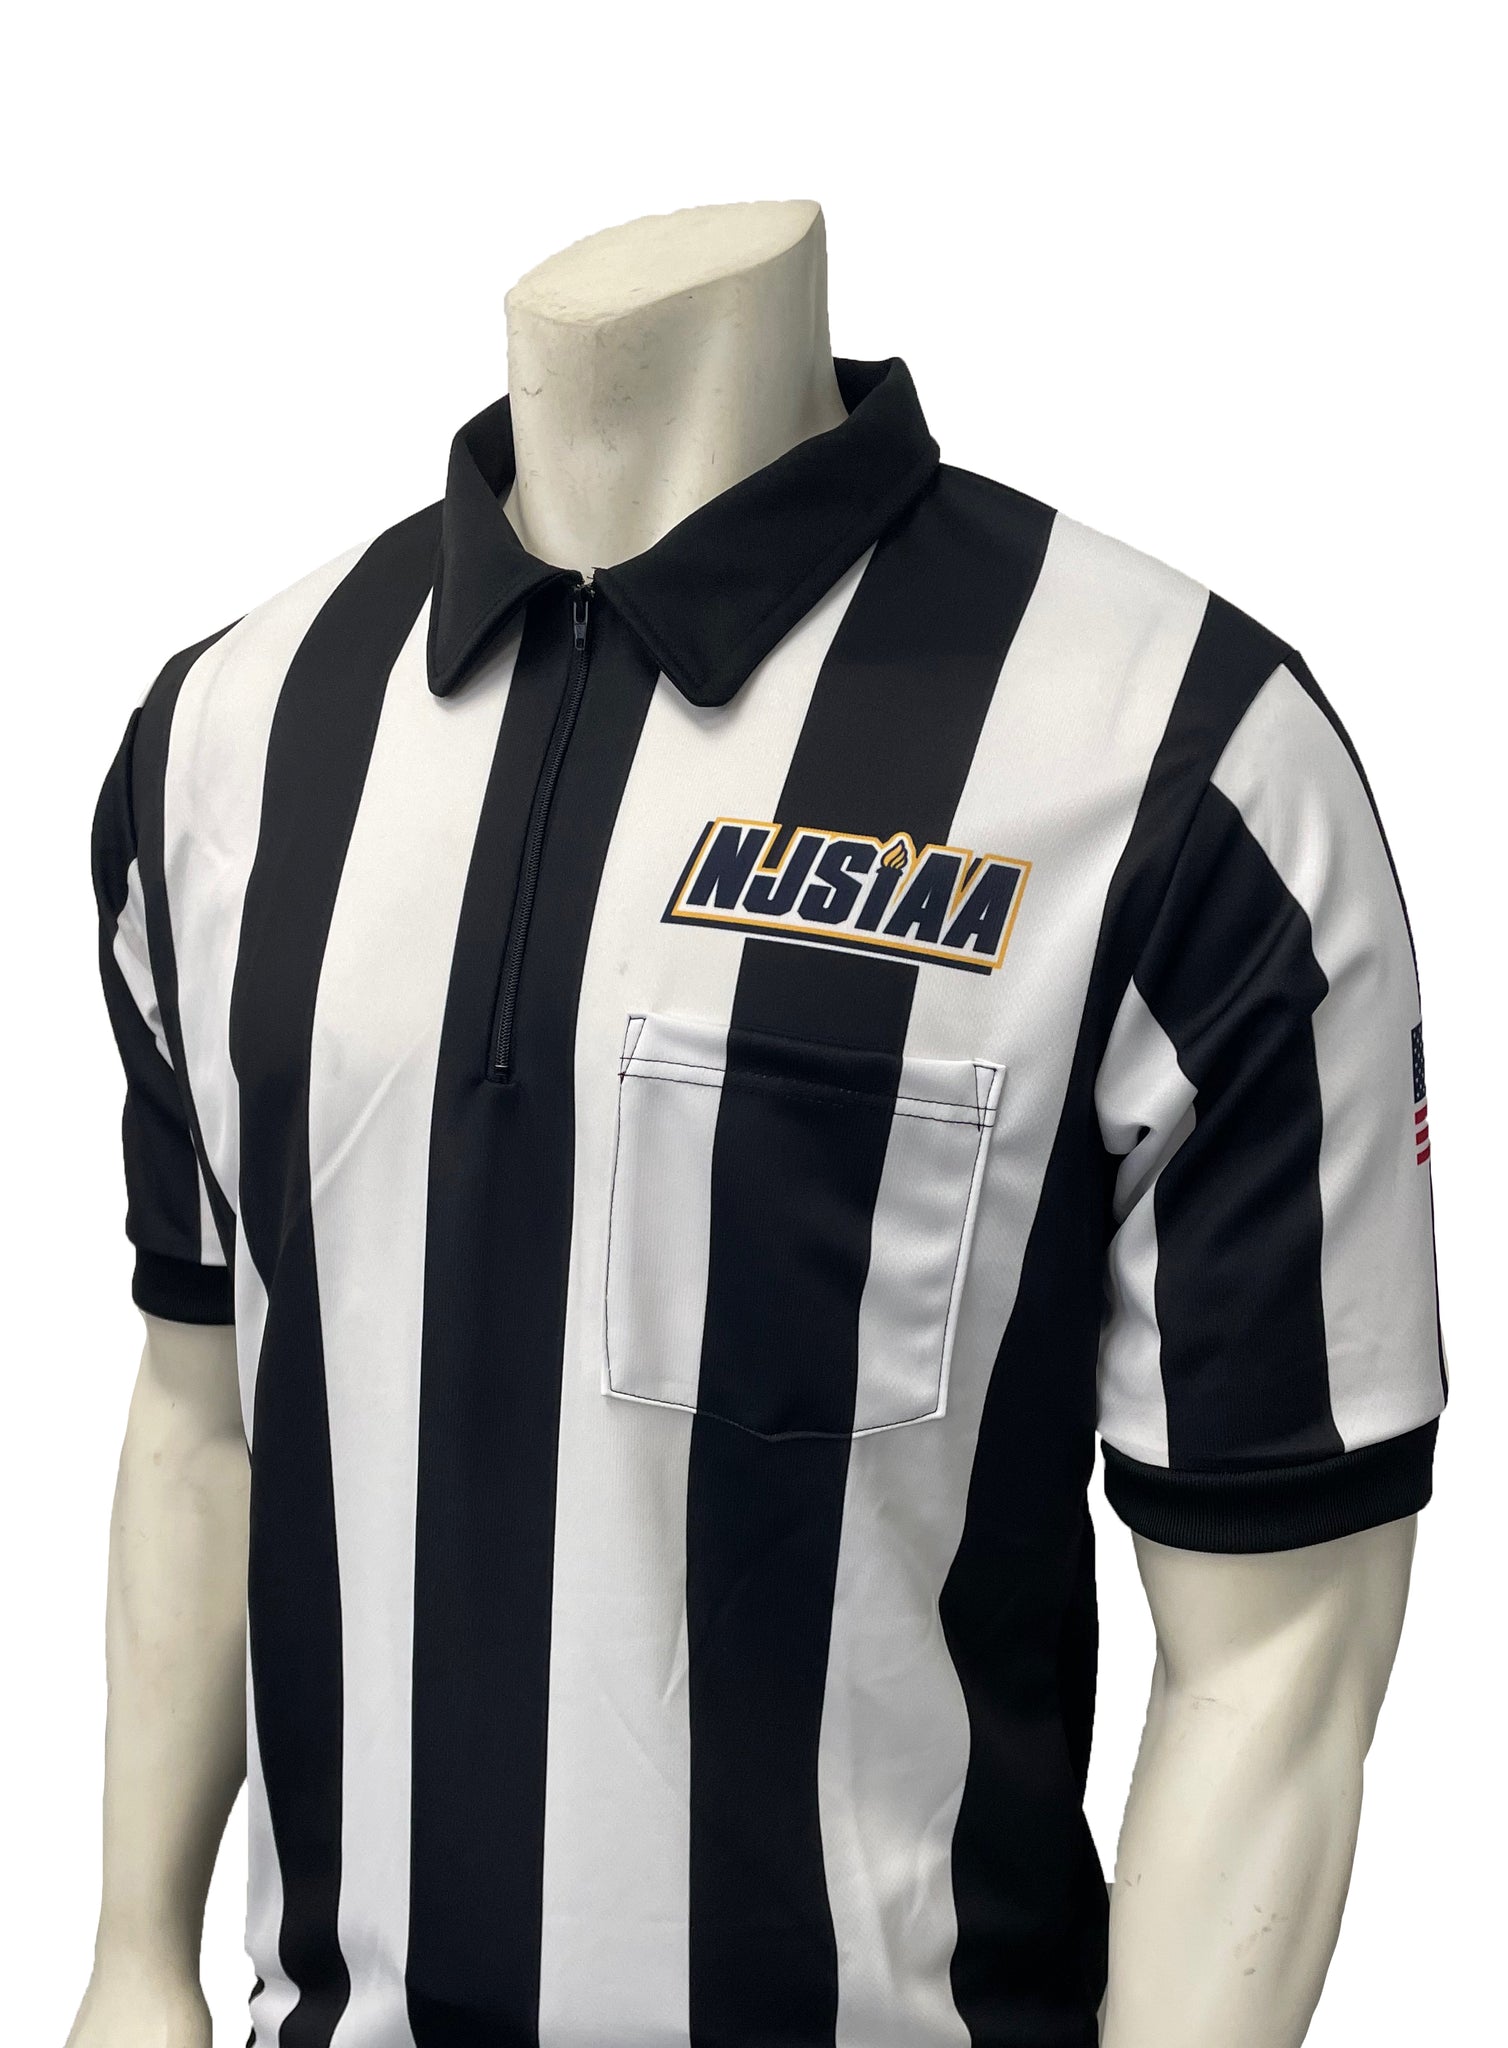 USA137NJ-607 - Smitty "Made in USA" - "BODY FLEX" NJSIAA Men's Football and Lacrosse Short Sleeve Shirt